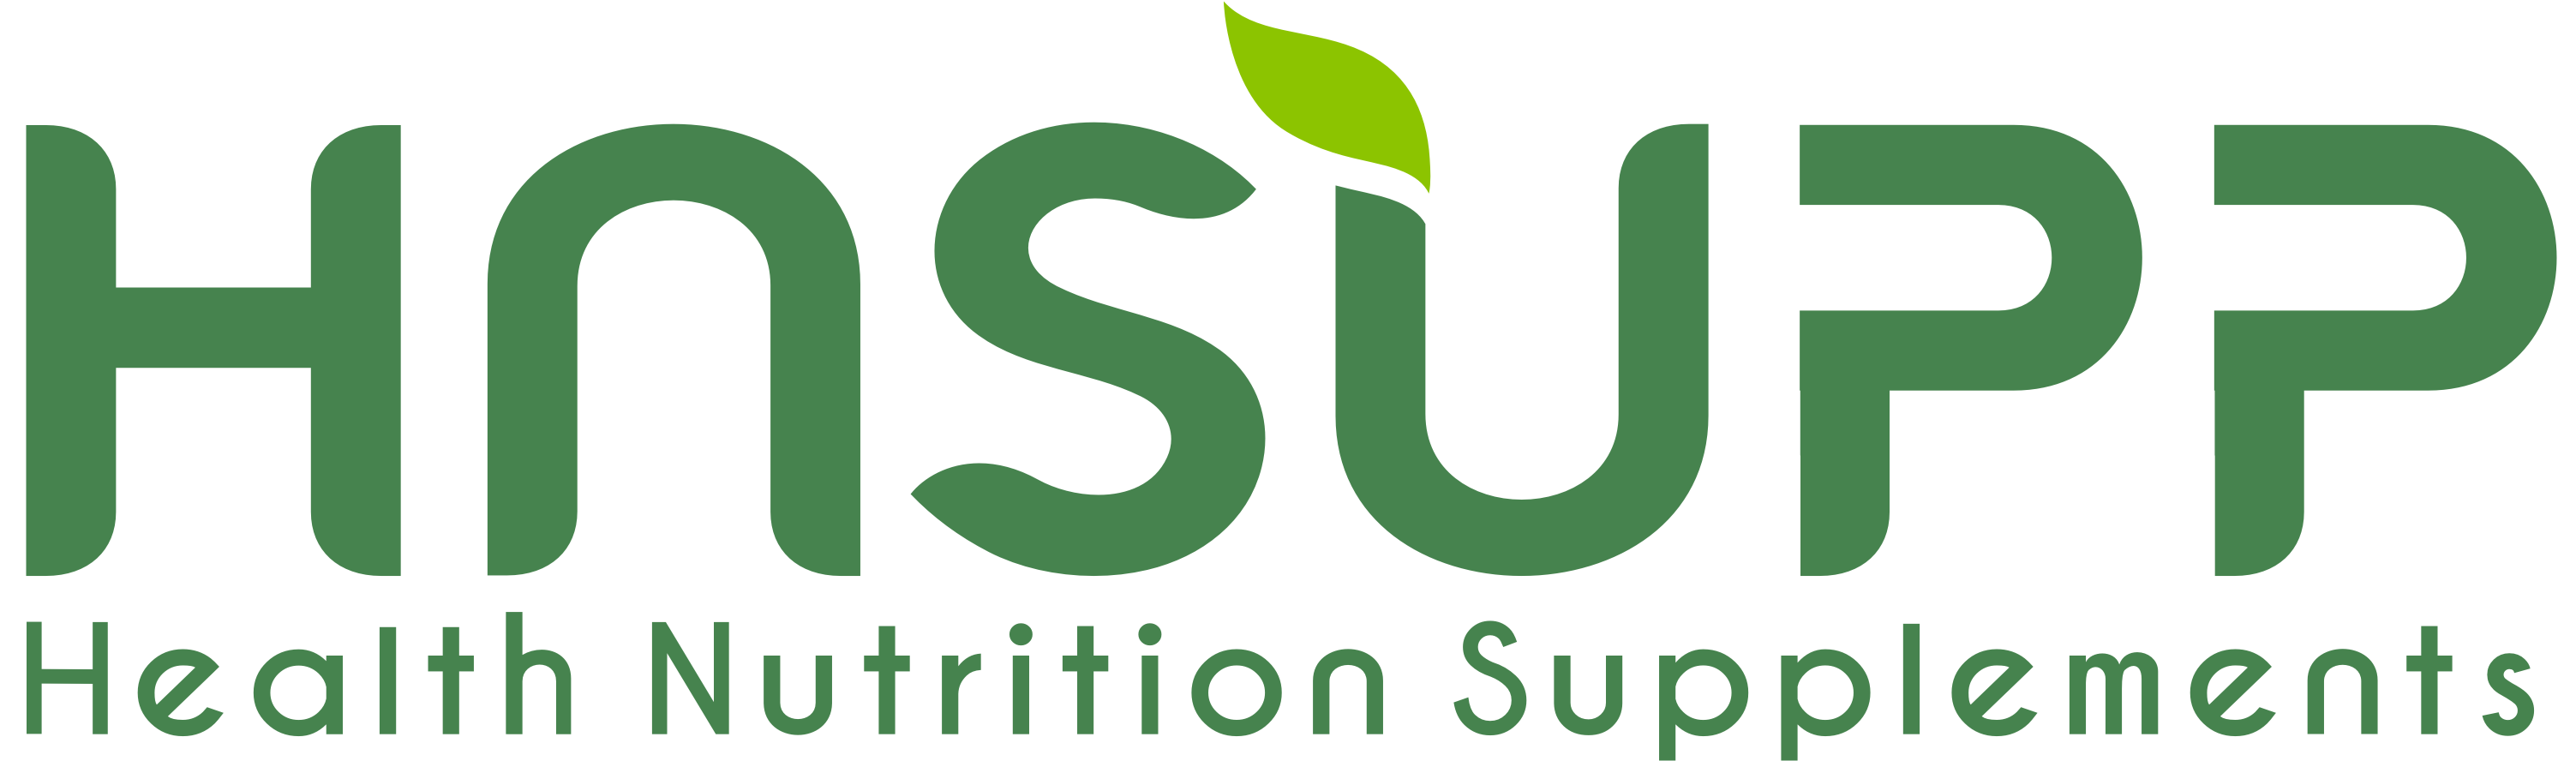 HNSUPP-HEALTH&NUTRITION SUPPLEMENTS